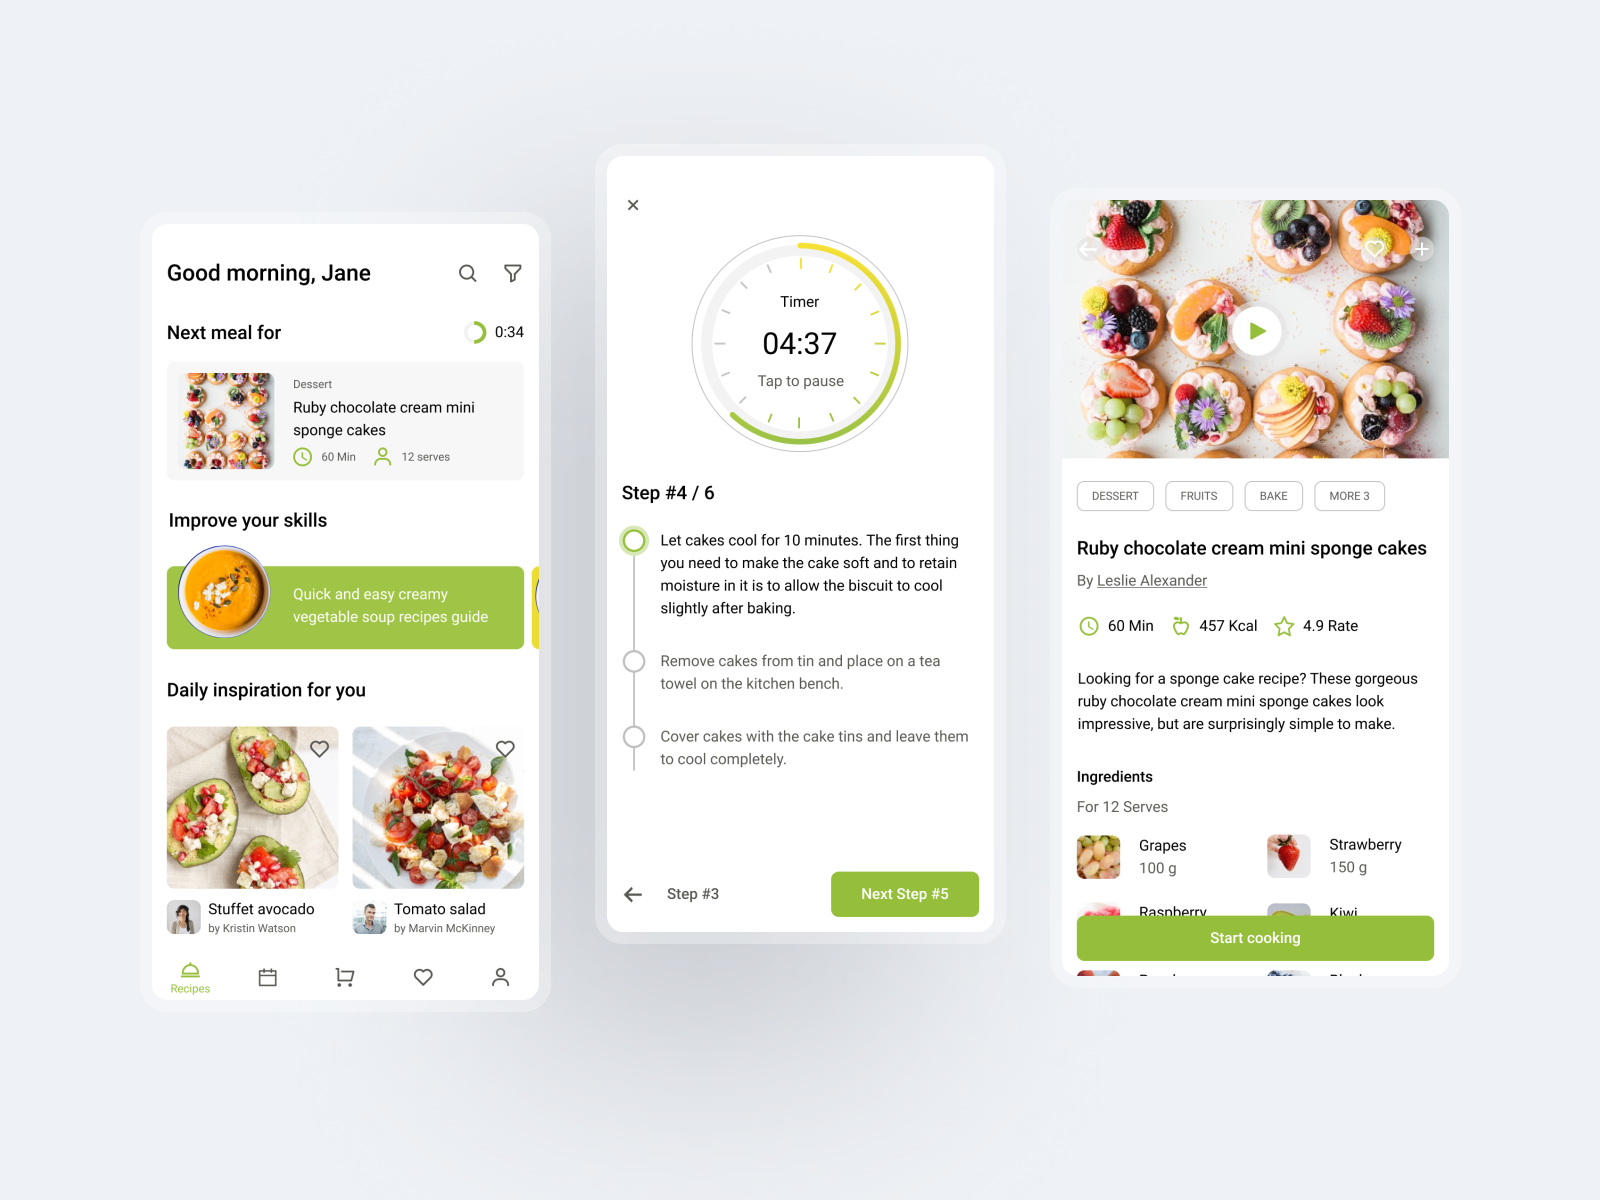 meal planner pro app